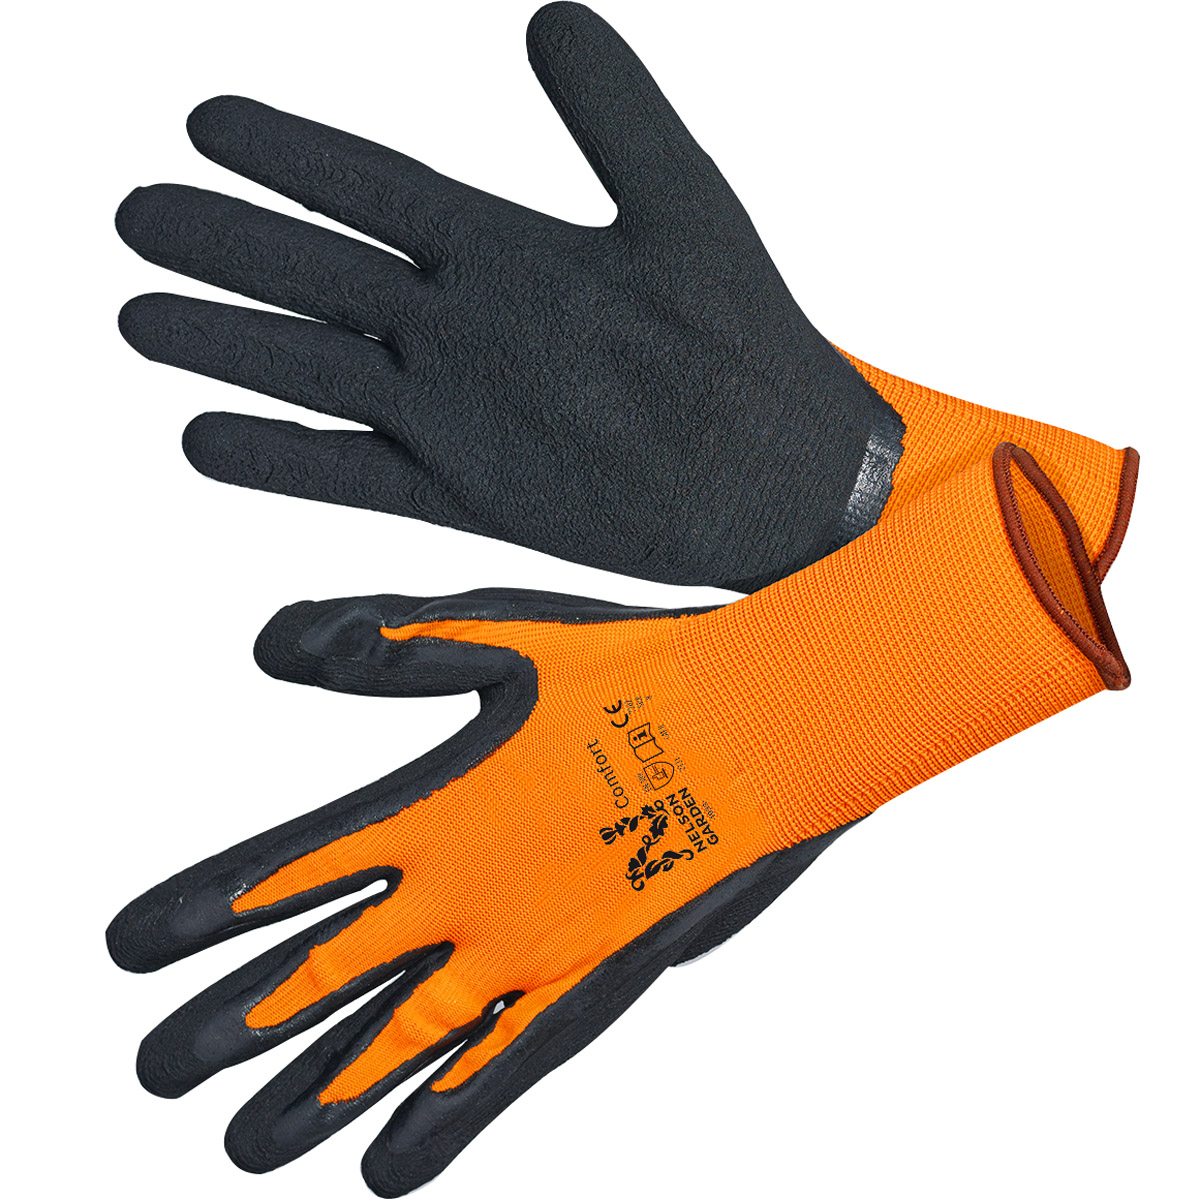 Handske Comfort, storlek 9 orange/svart